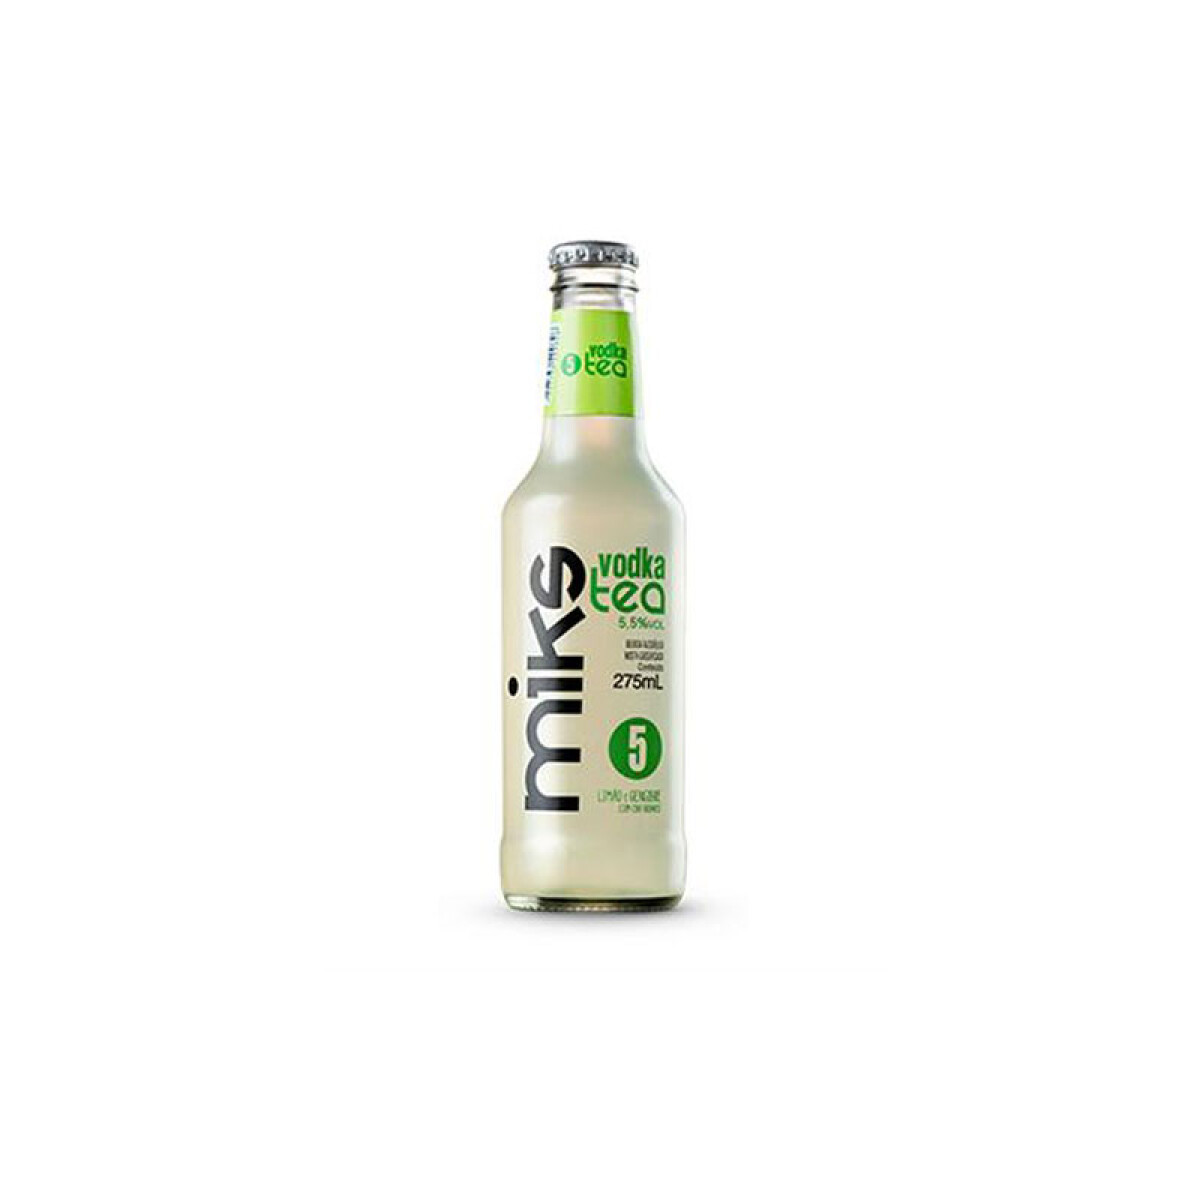 Vodka MIKS 275ml - Limón Jengibre y Té Blanco 